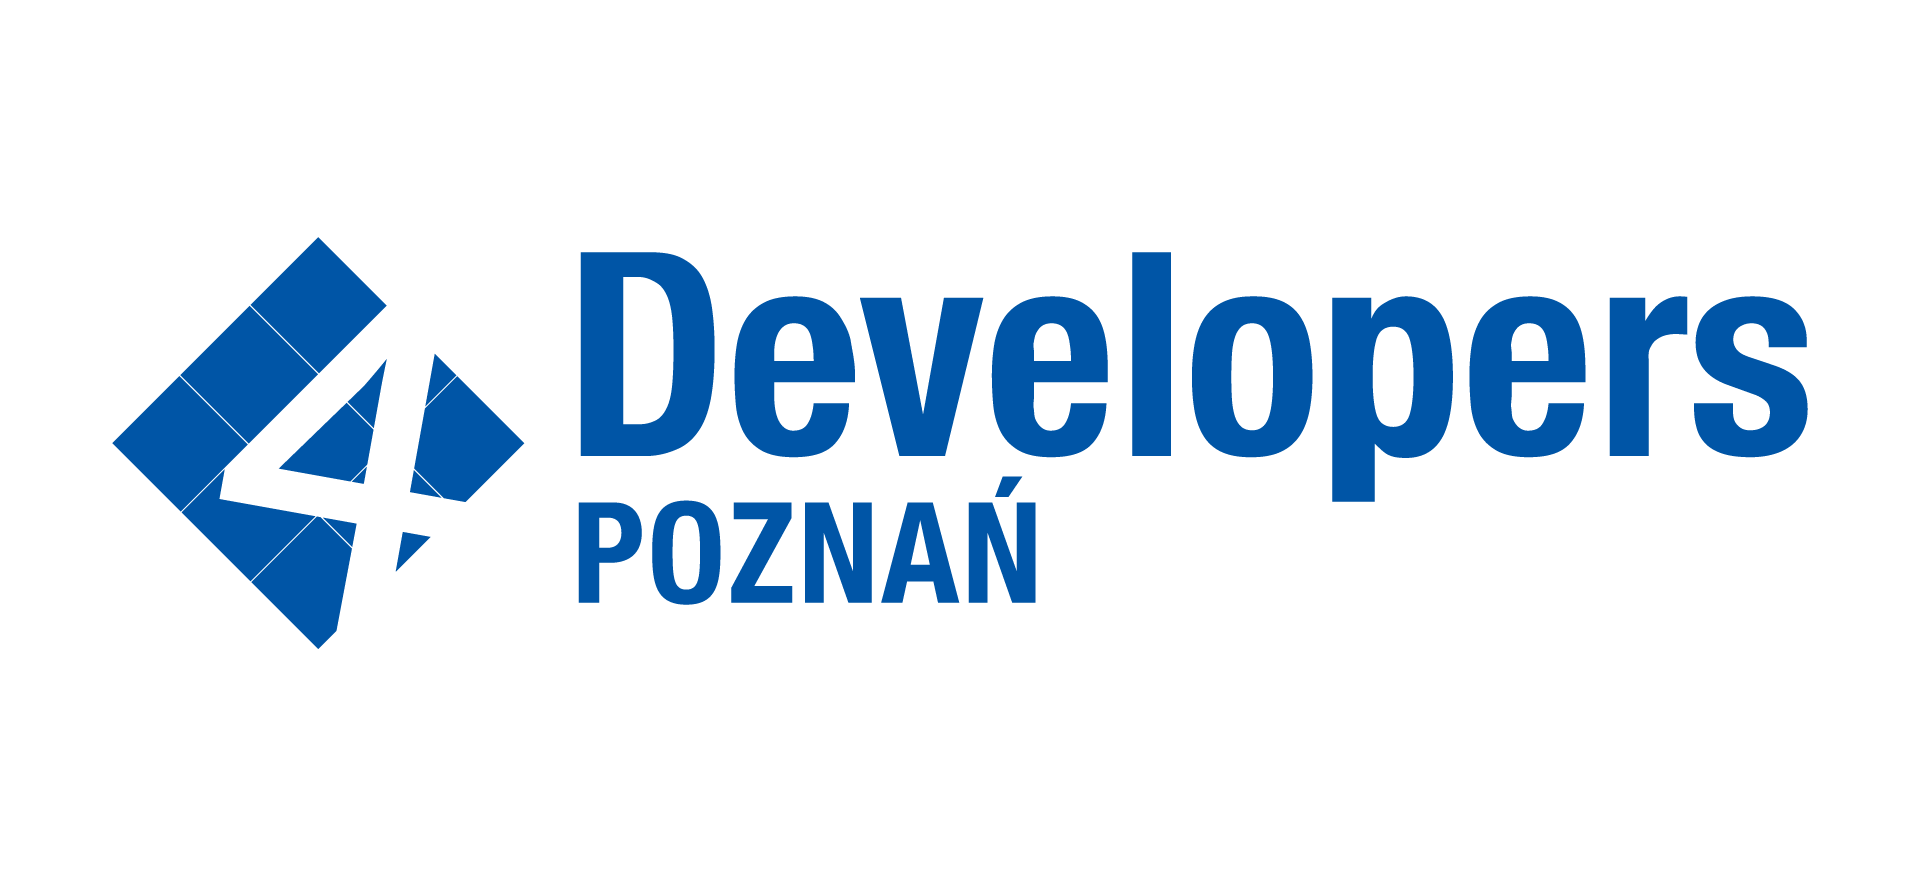 4developers-poznan-2019